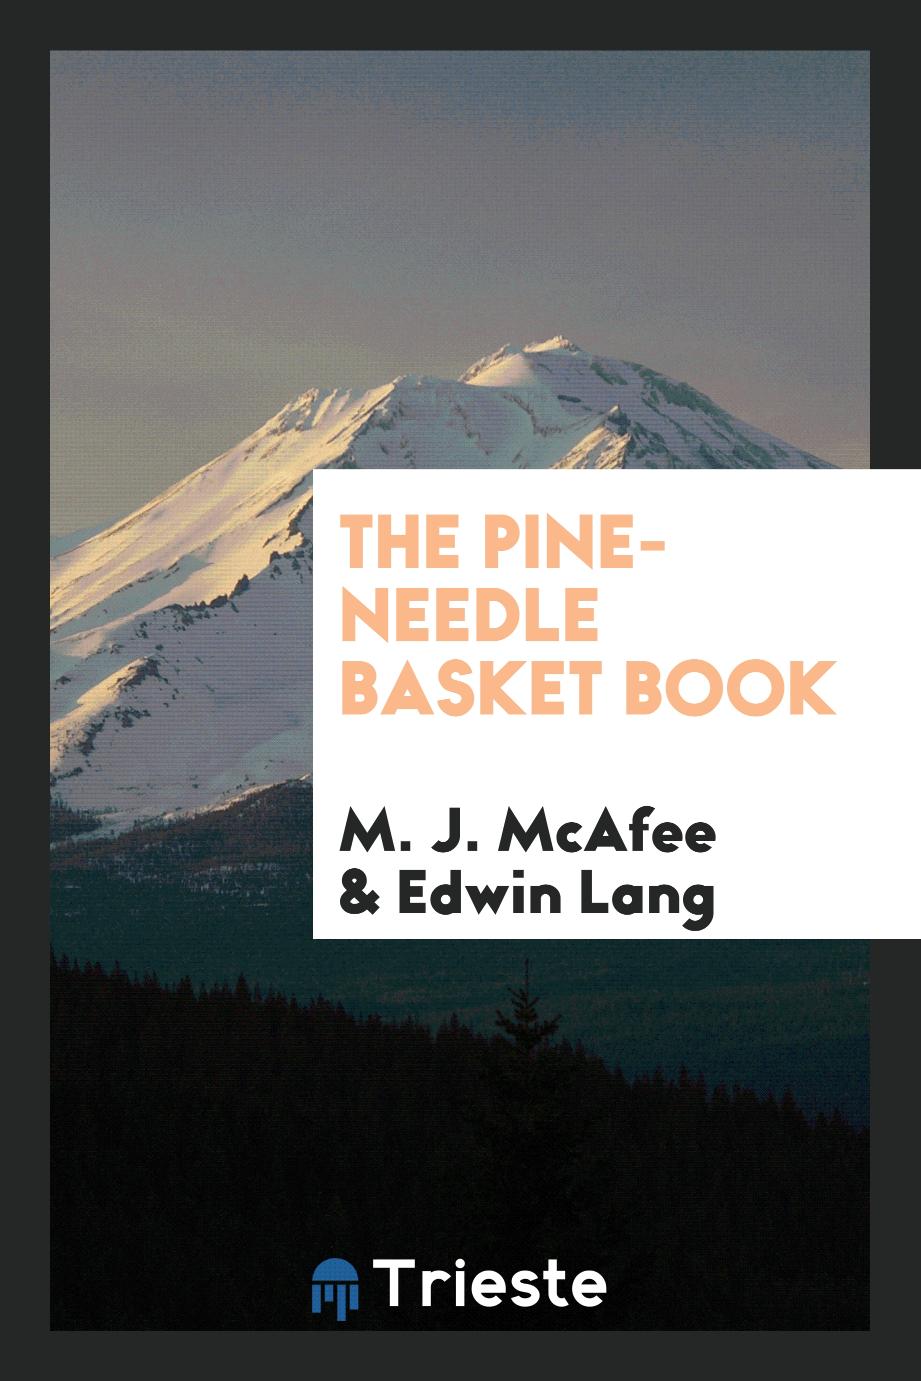 The pine-needle basket book